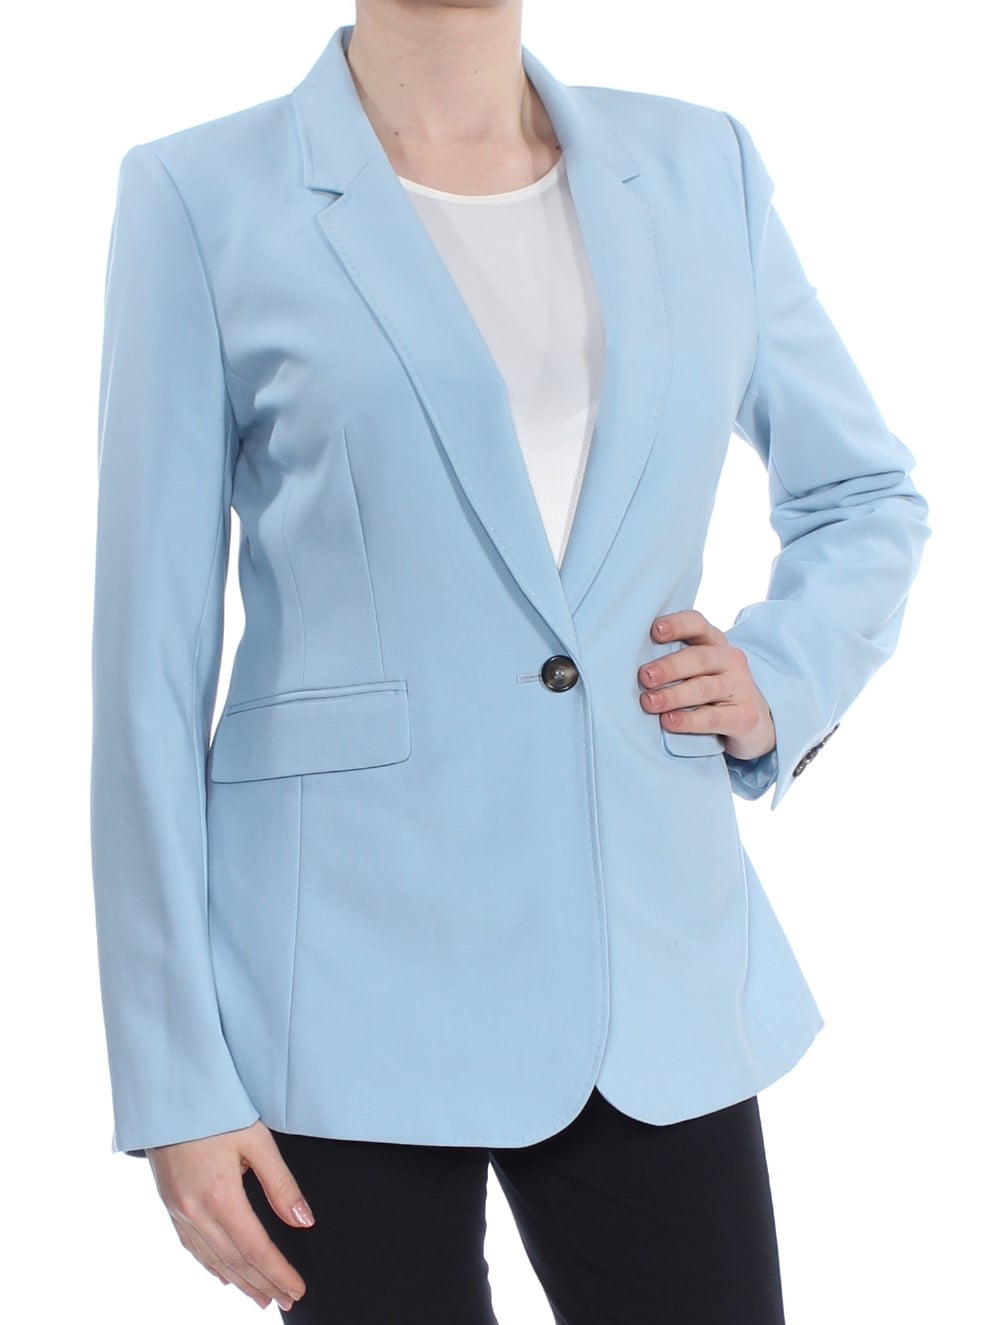 DKNY $139 Womens New 1103 Light Blue Wear To Work Suit Jacket 10 B+B ...